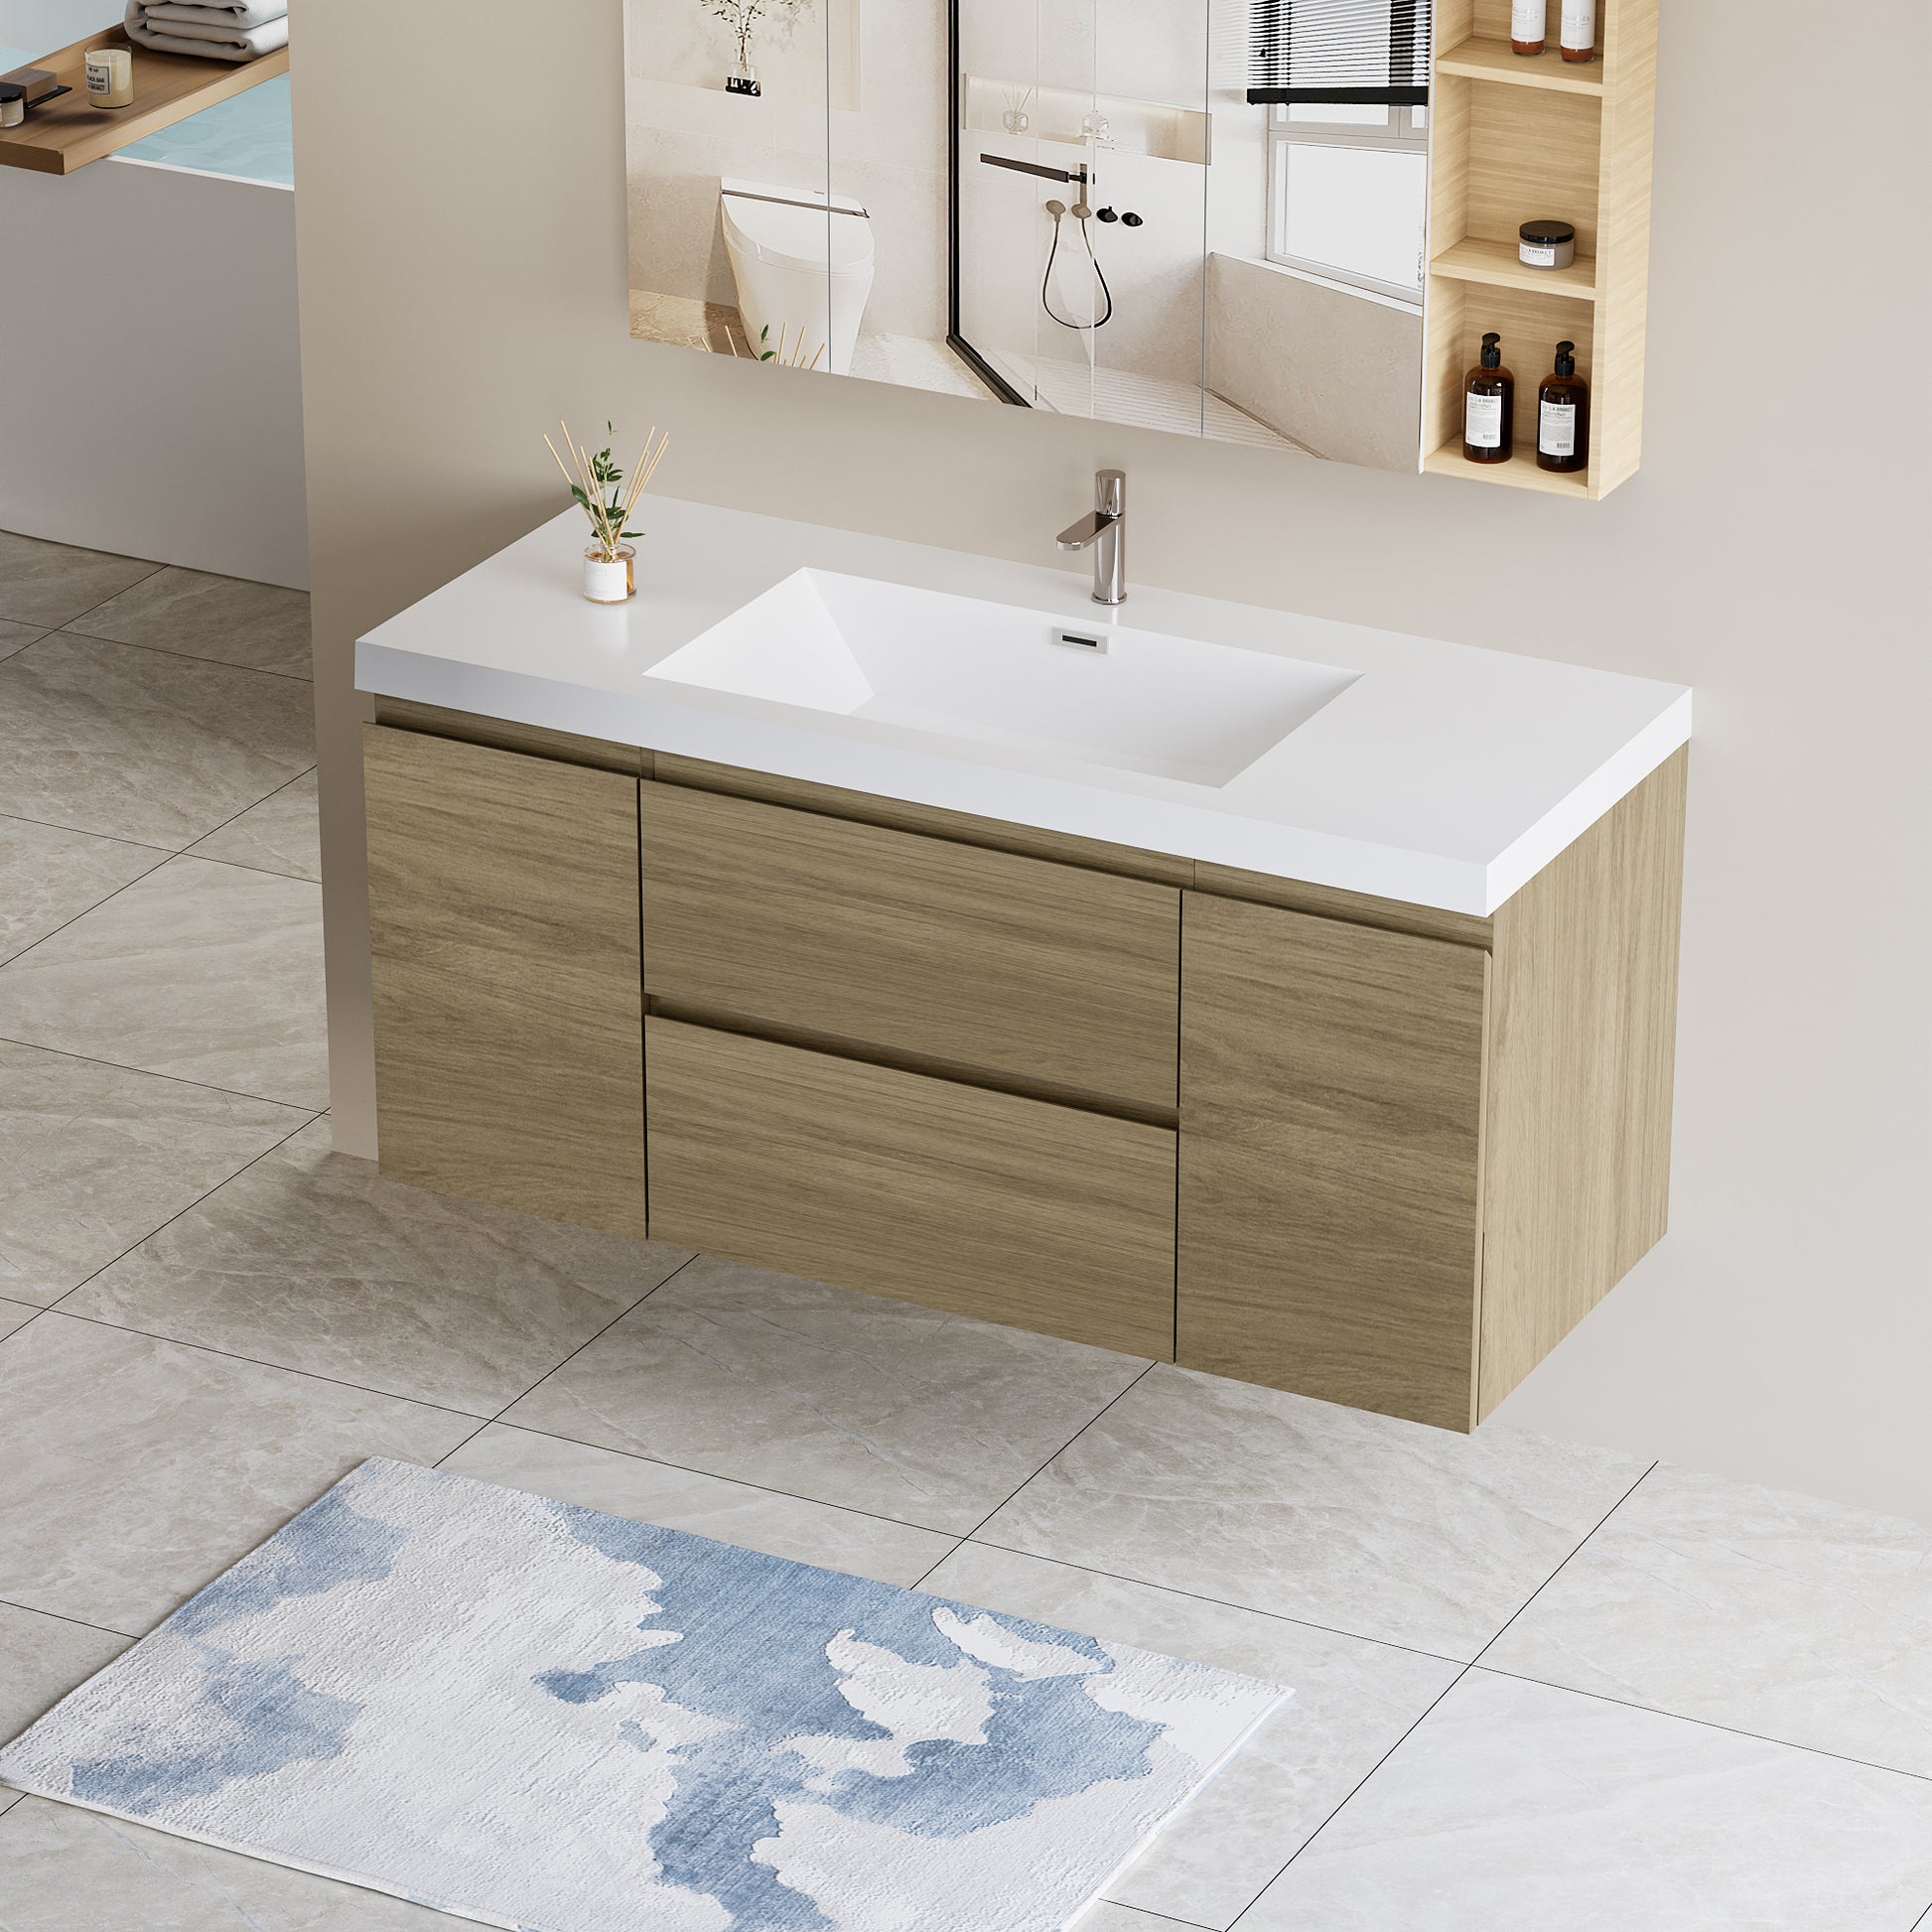 48" Floating Bathroom Vanity with Sink, Modern Wall 2-oak-2-bathroom-wall mounted-melamine